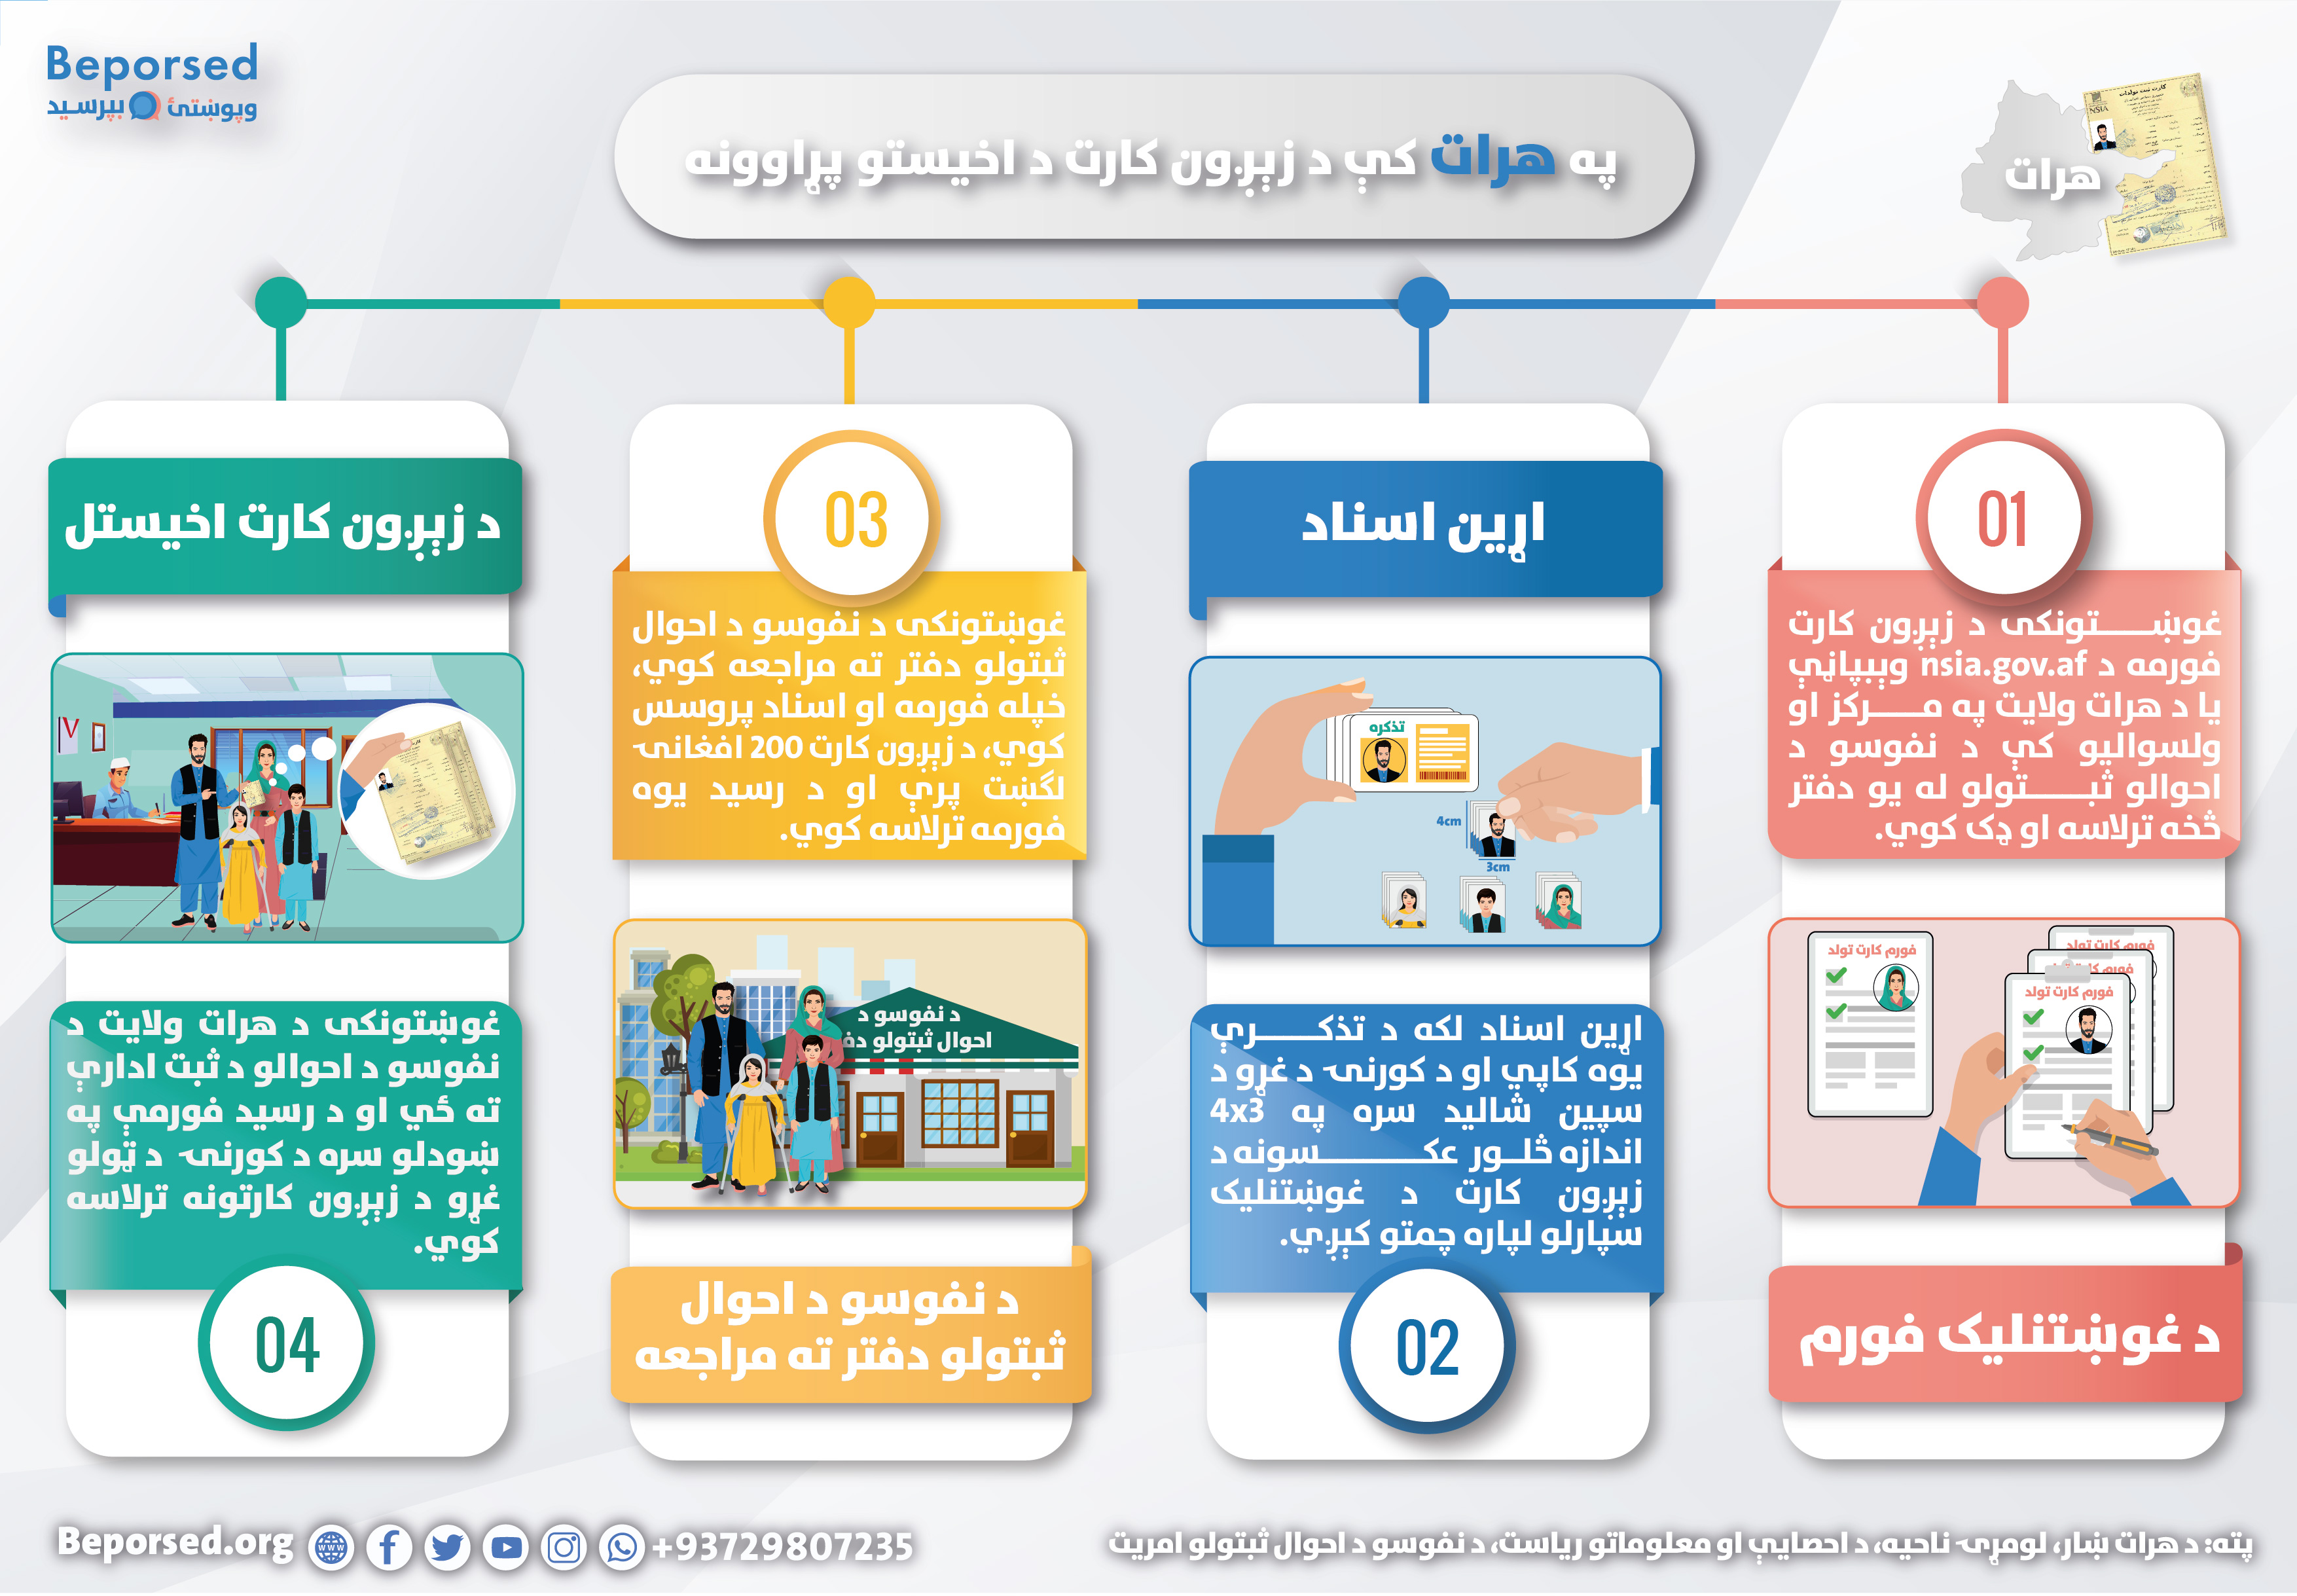 01-Herat Birth Certificate Process-02.jpg